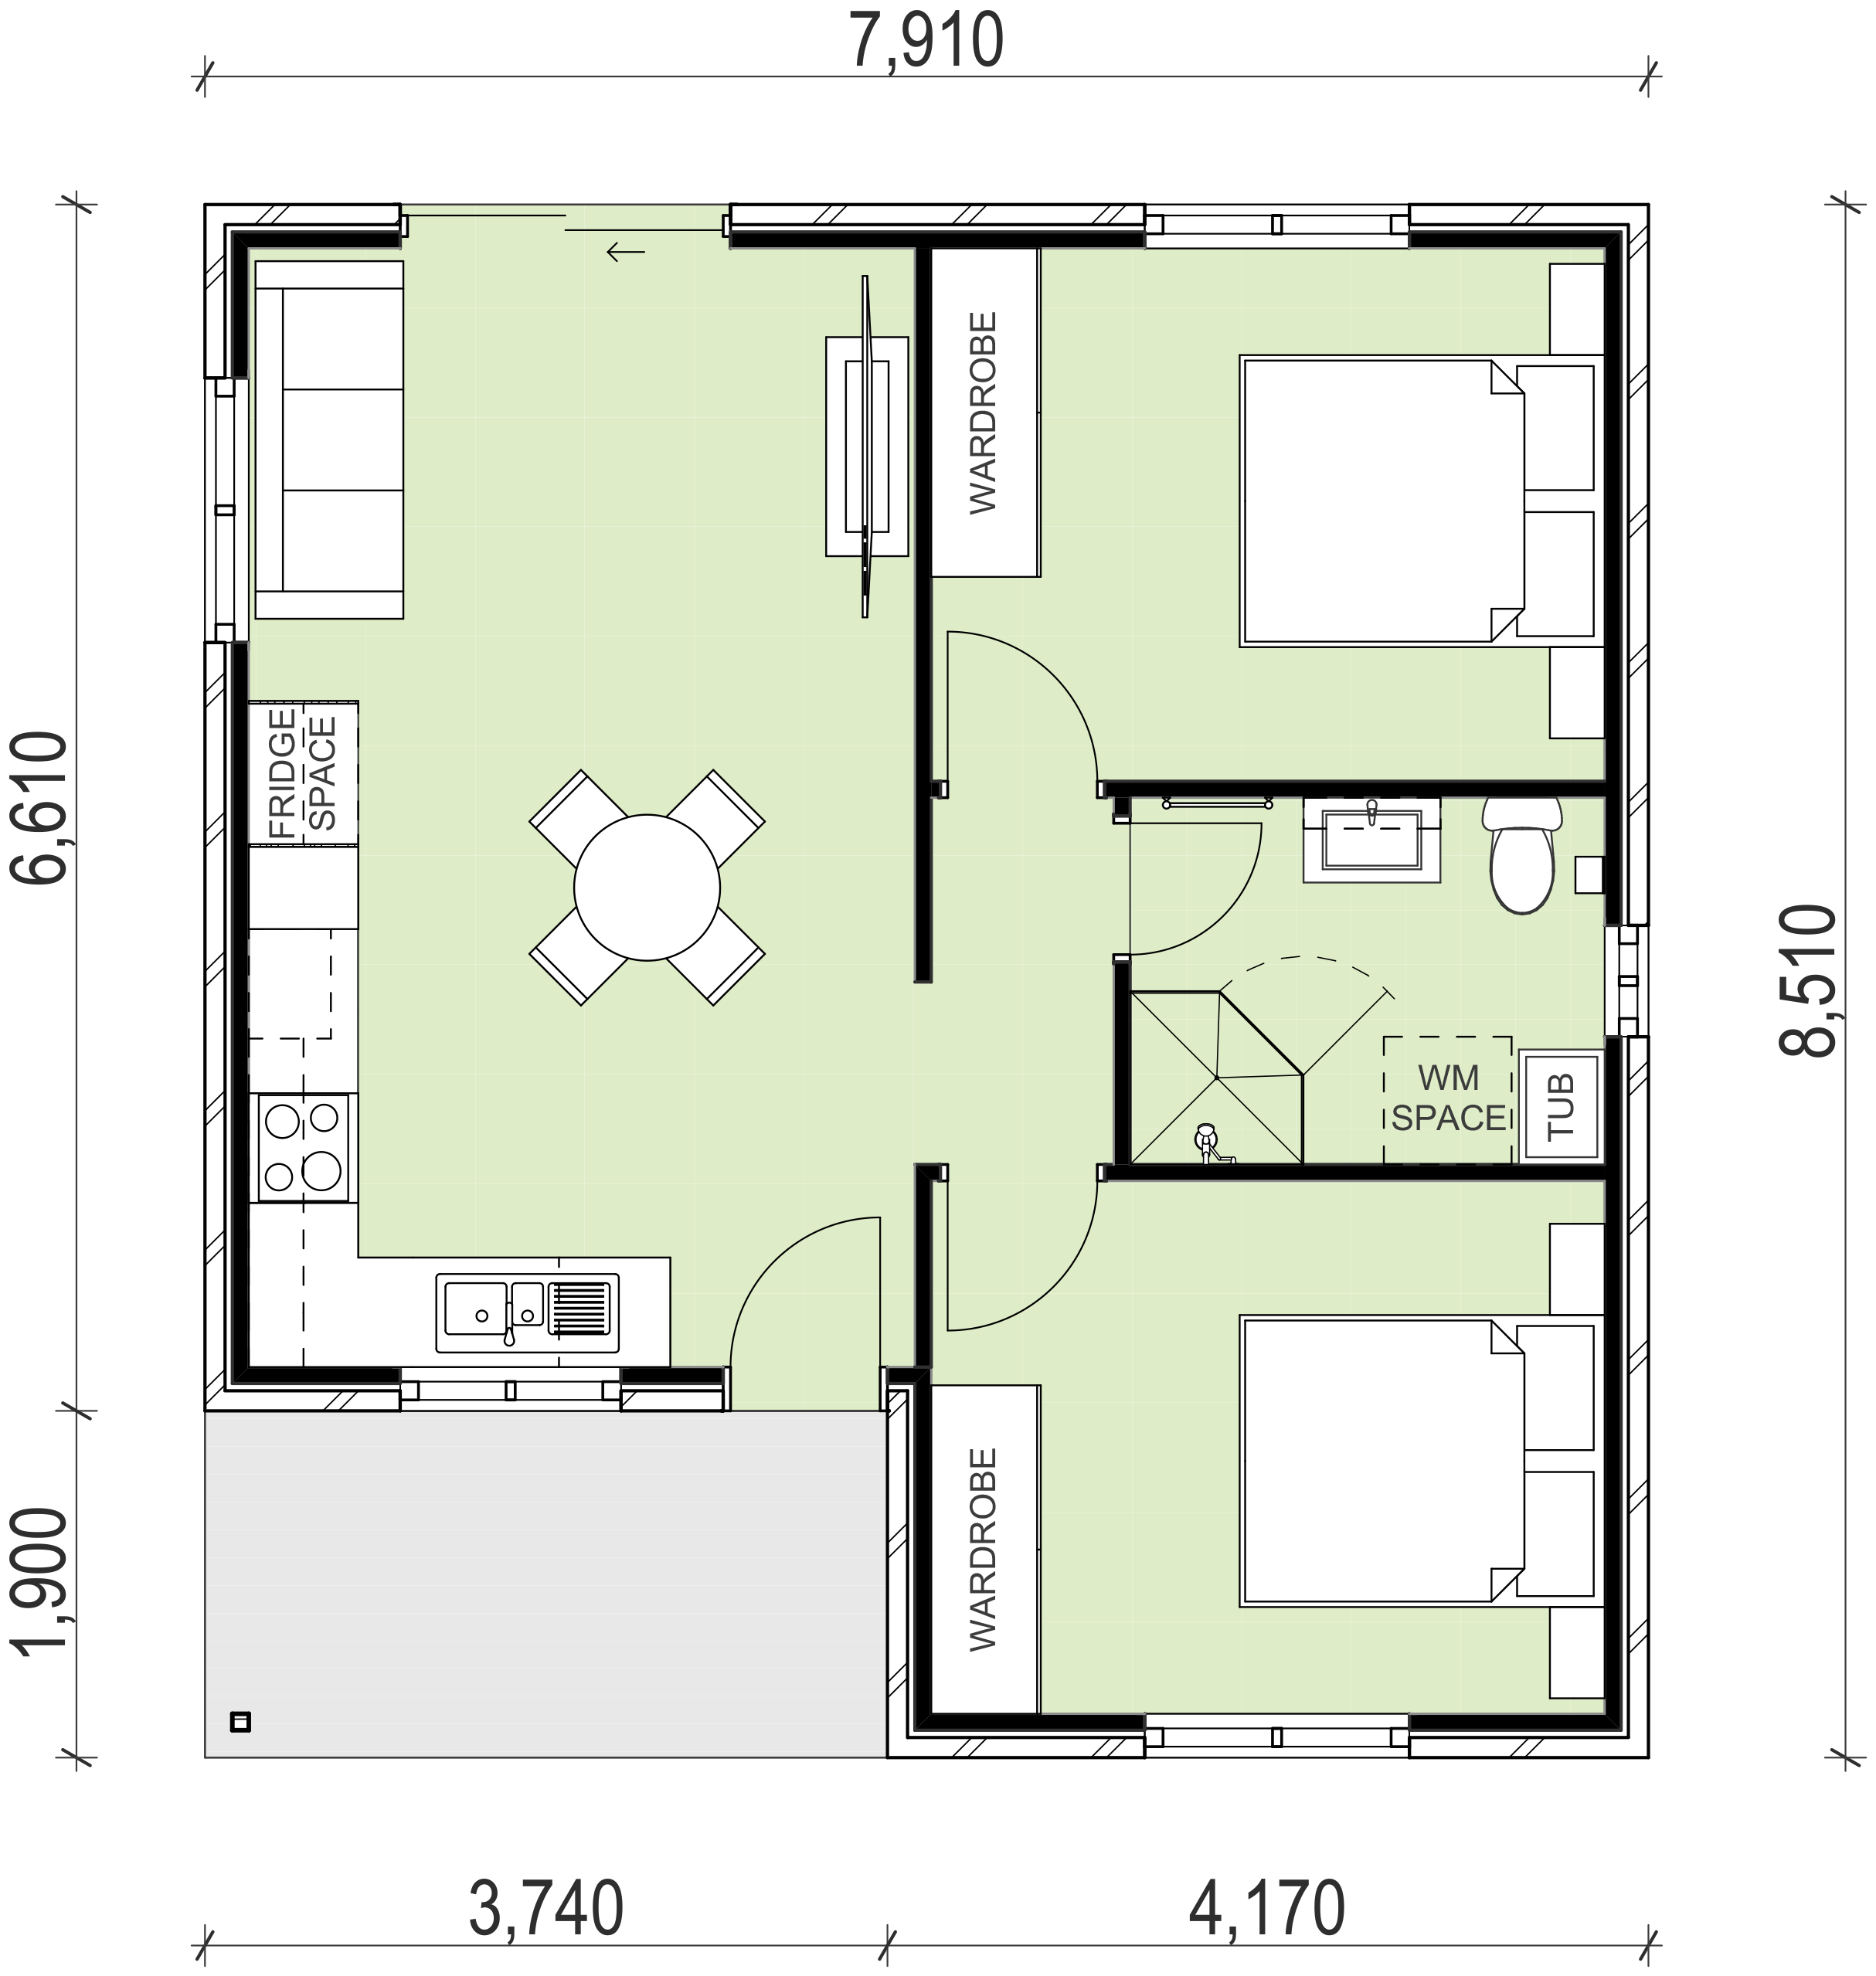 Granny flat floor plan design with 2 bedrooms and 1 bathroom